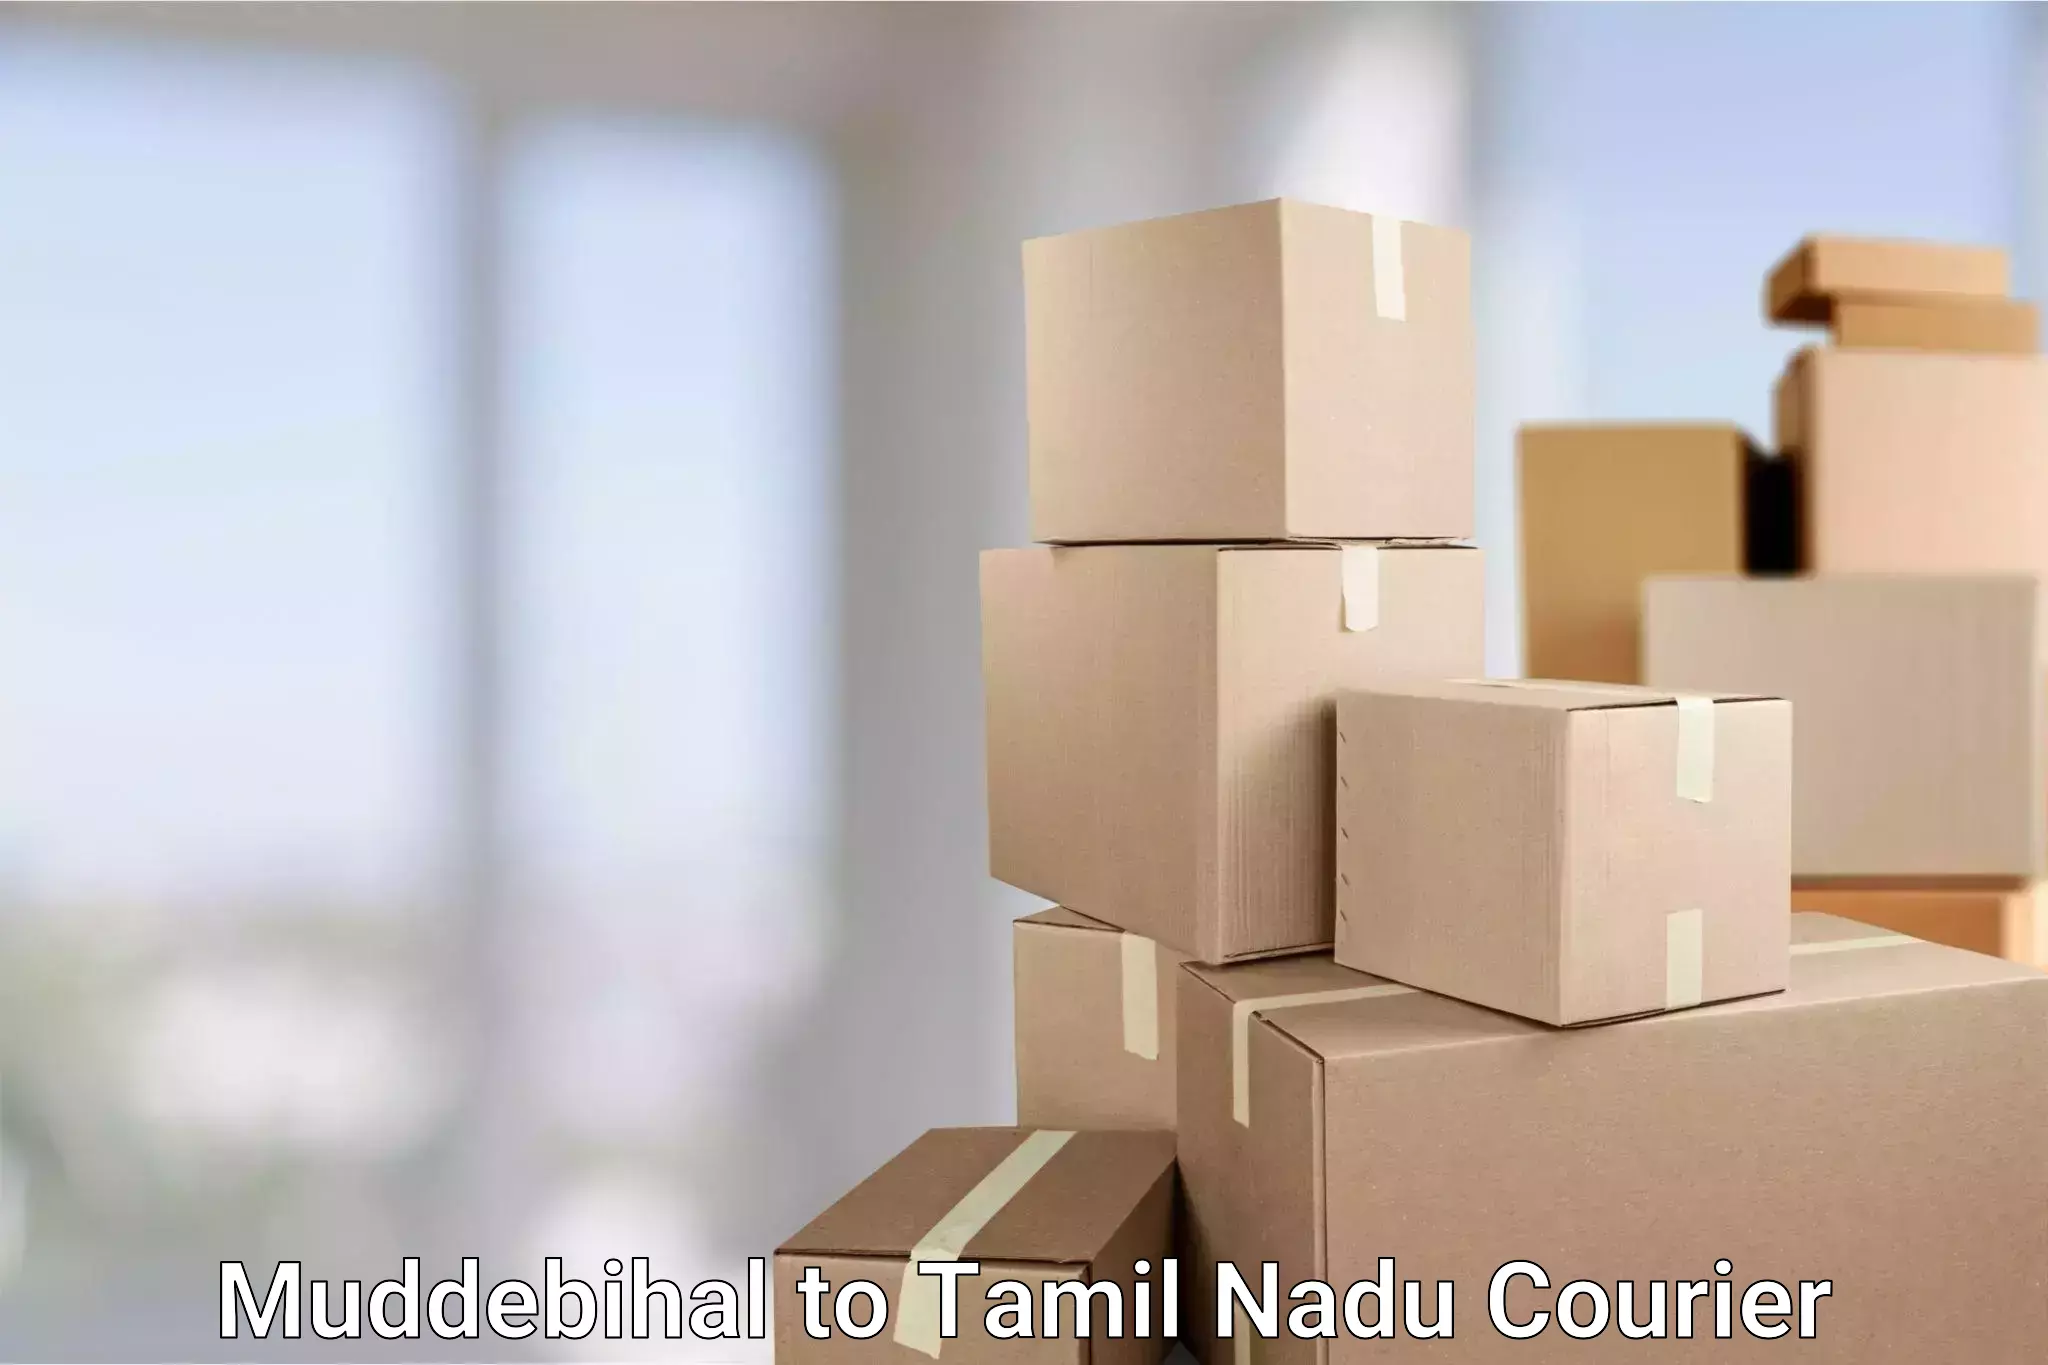 Supply chain delivery Muddebihal to Tamil Nadu